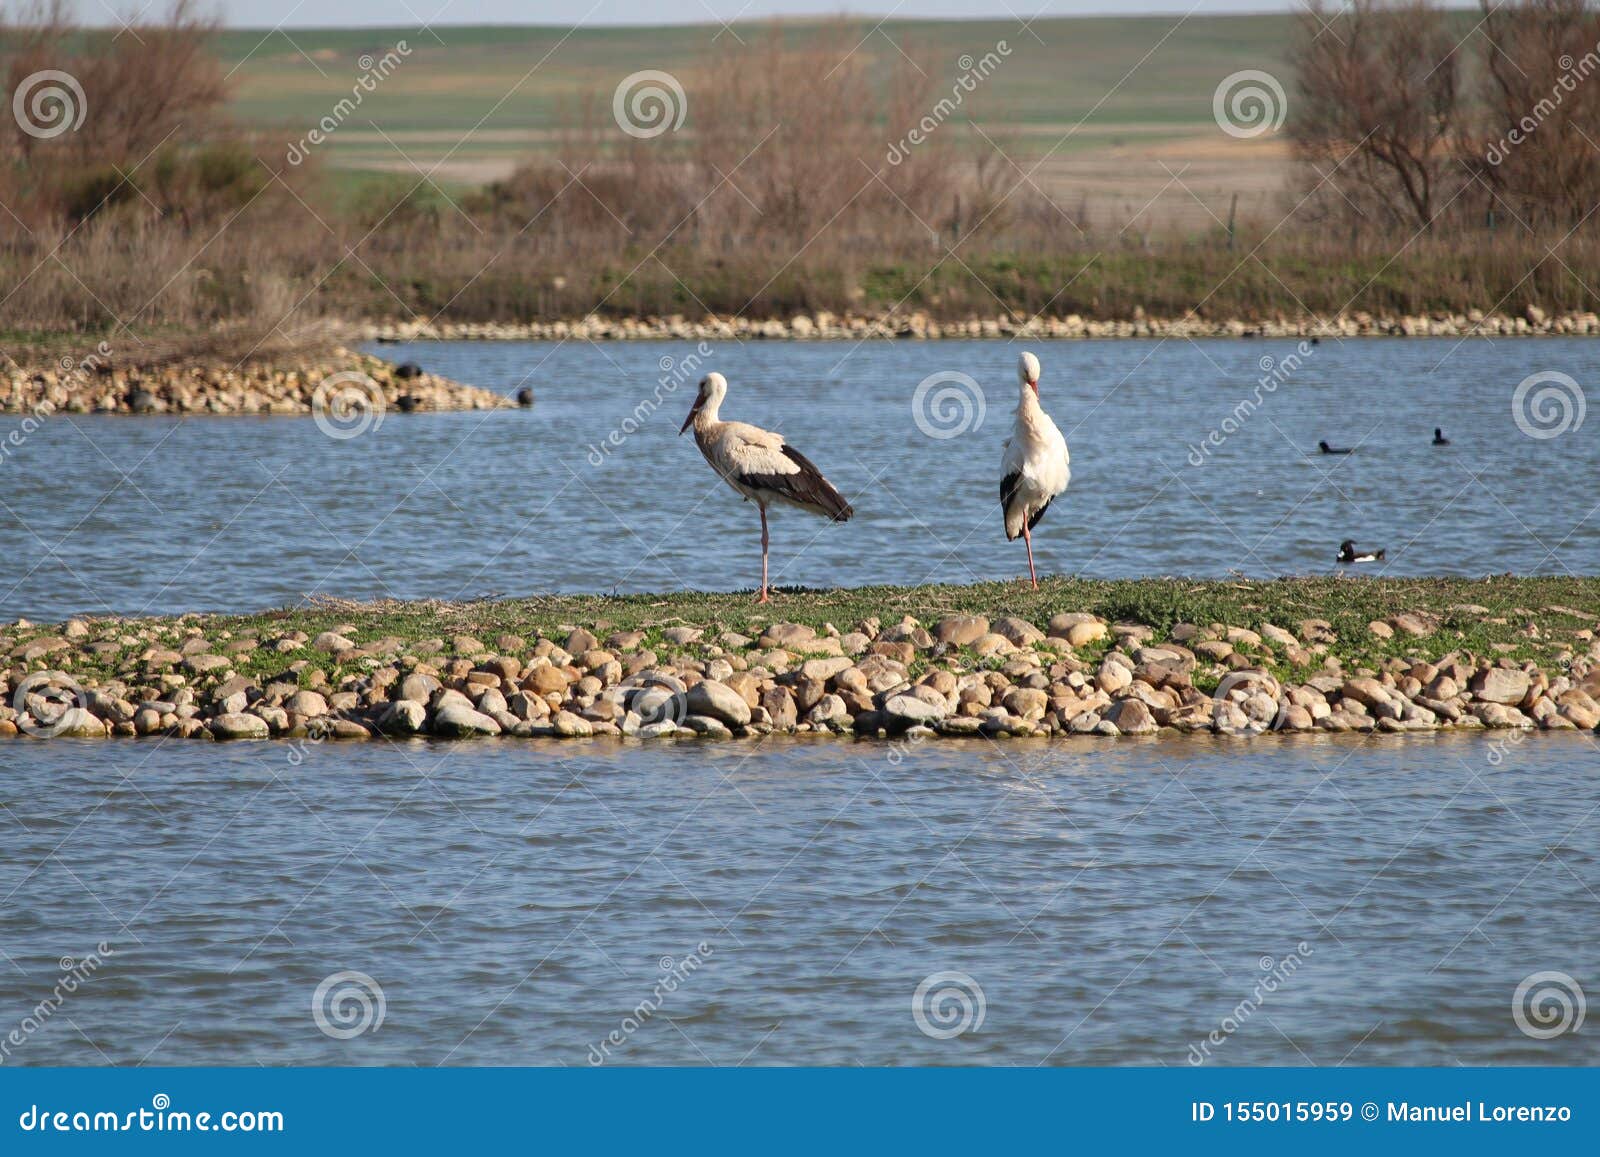 to keep precious storks resting trip toward the nest